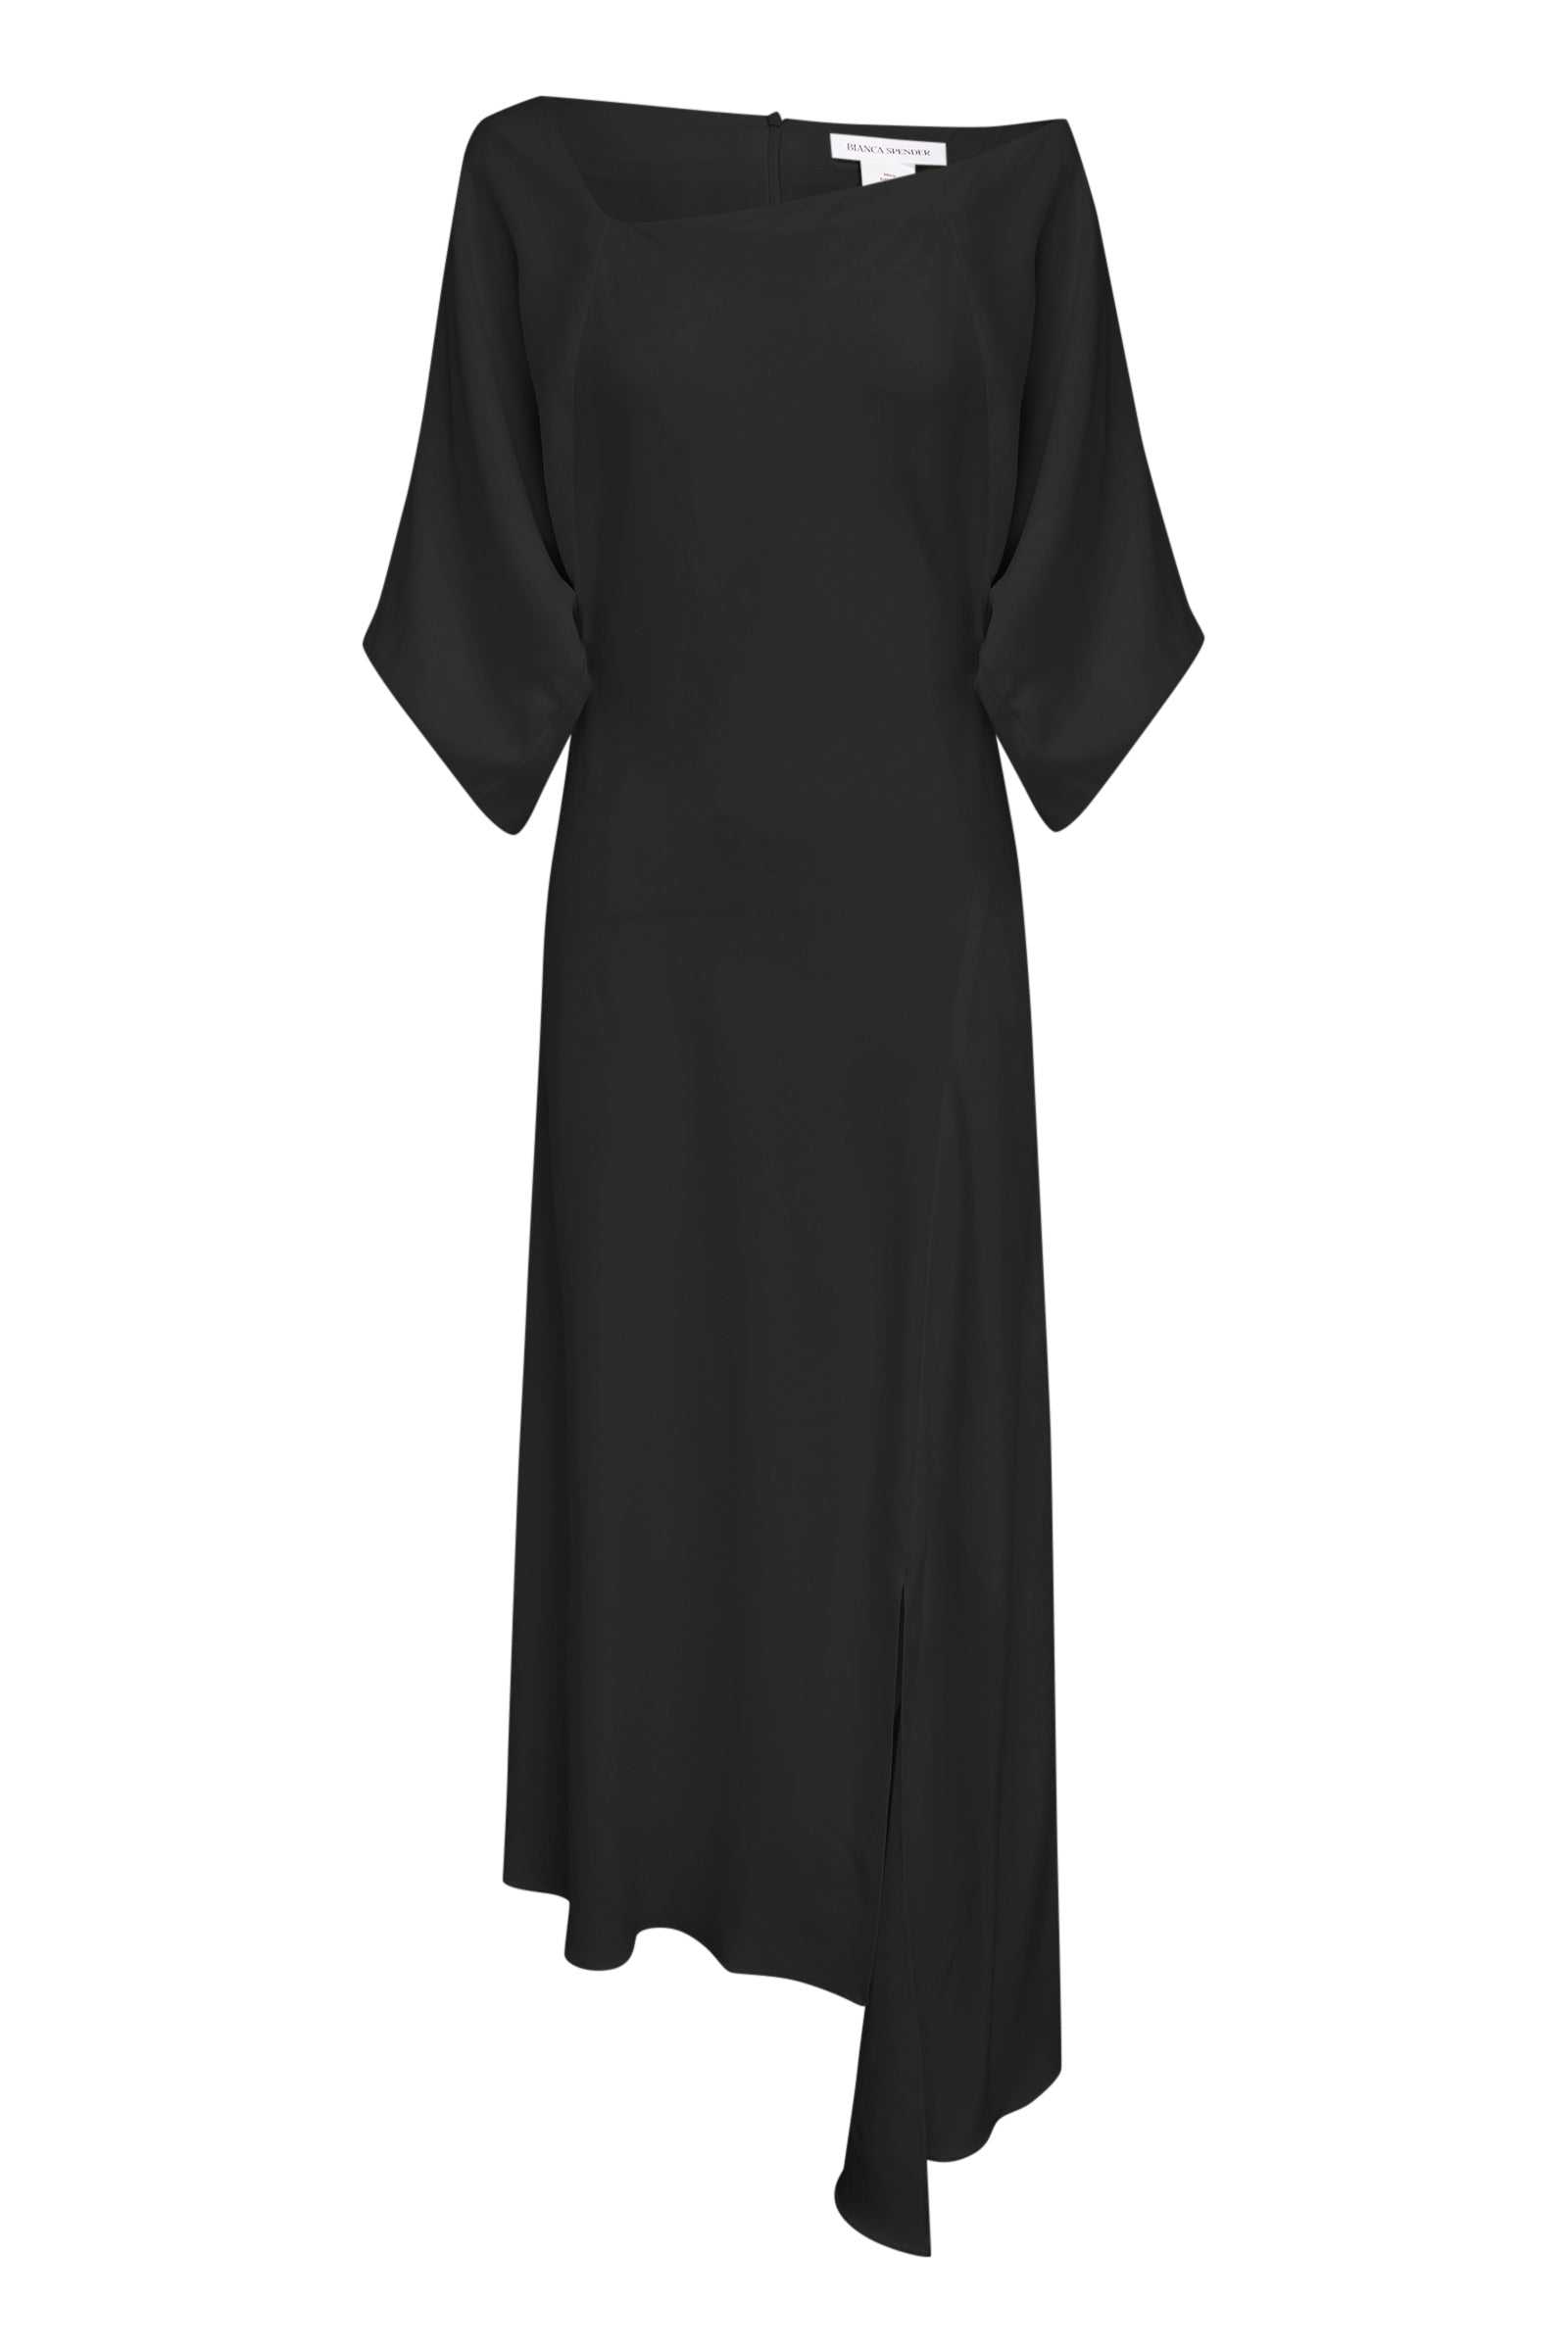 BLACK SATIN CREPE PALOMA DRESS – Bianca Spender